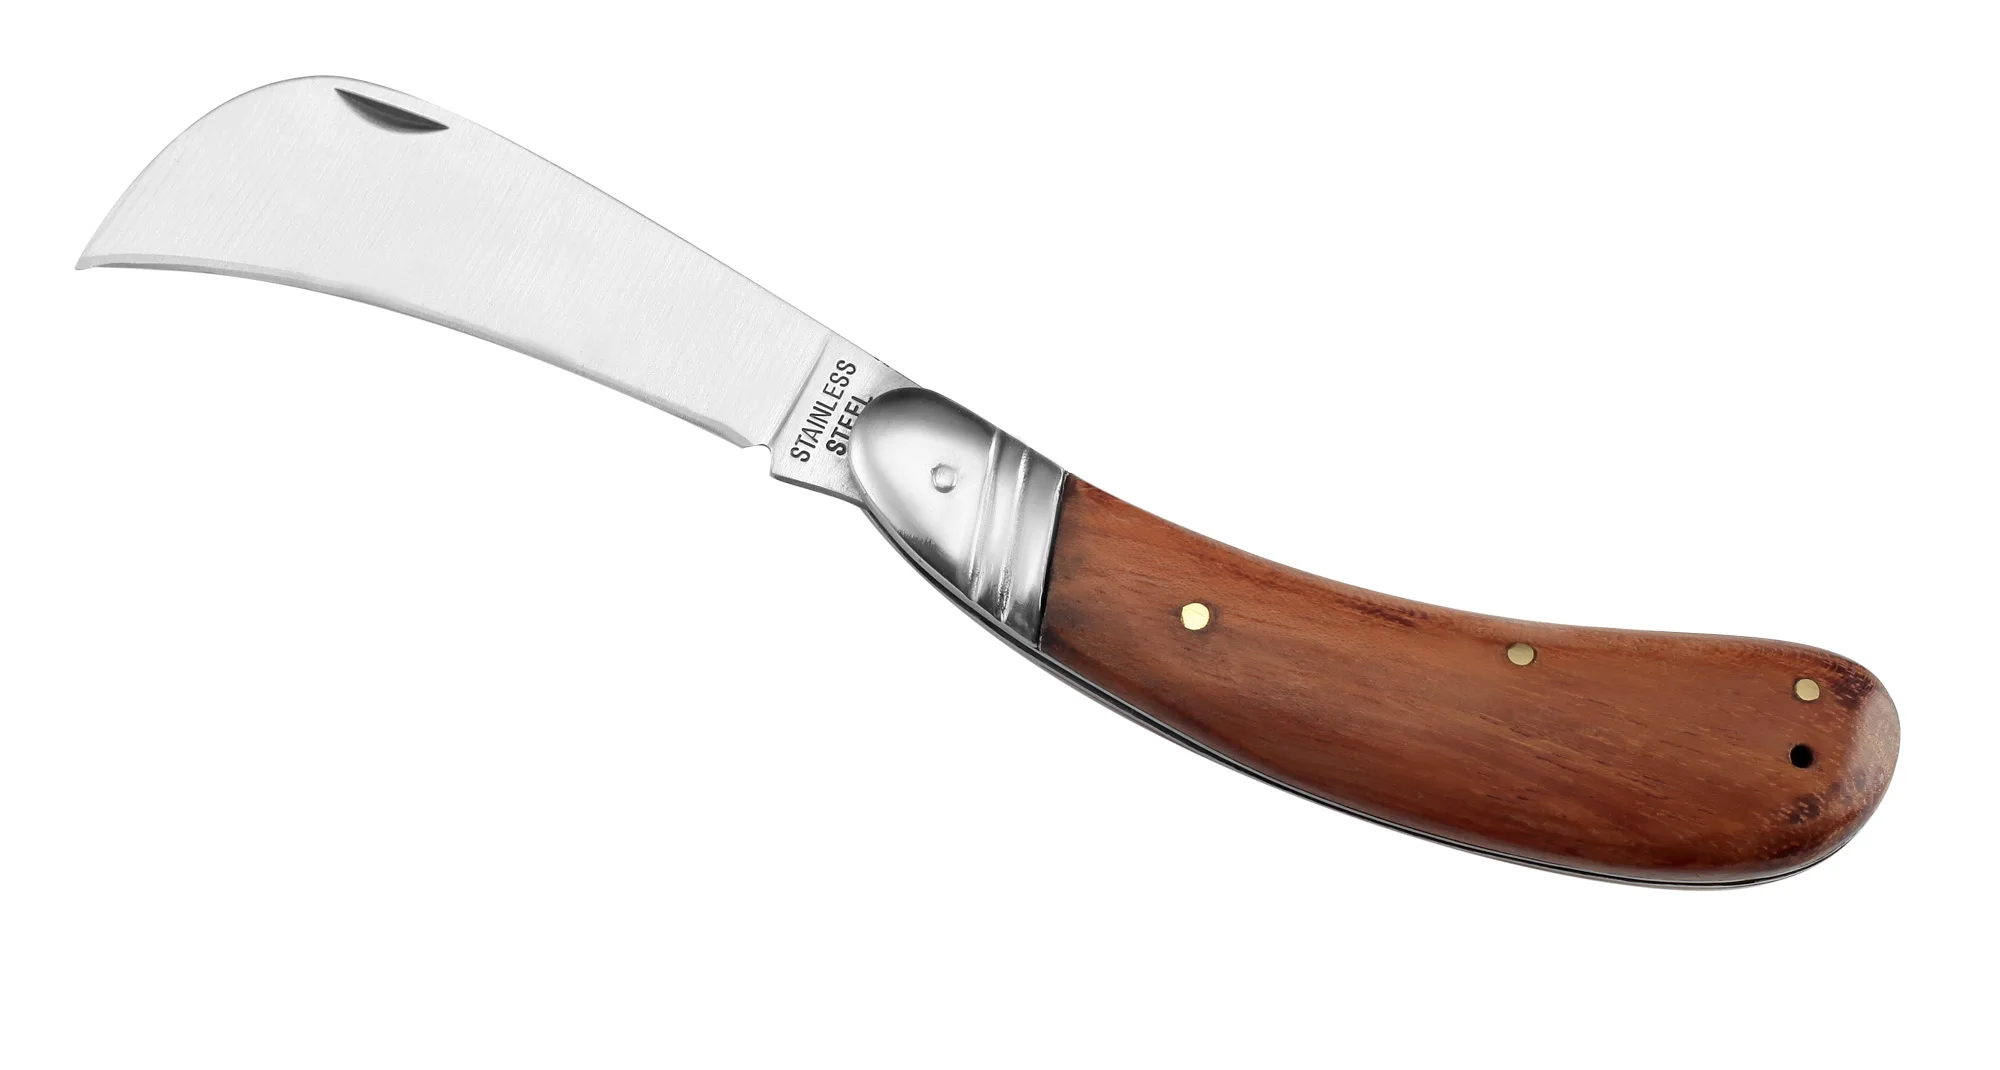 Hotsale All Over The World Wooden Handle Budding Knife - Buy Budding ...